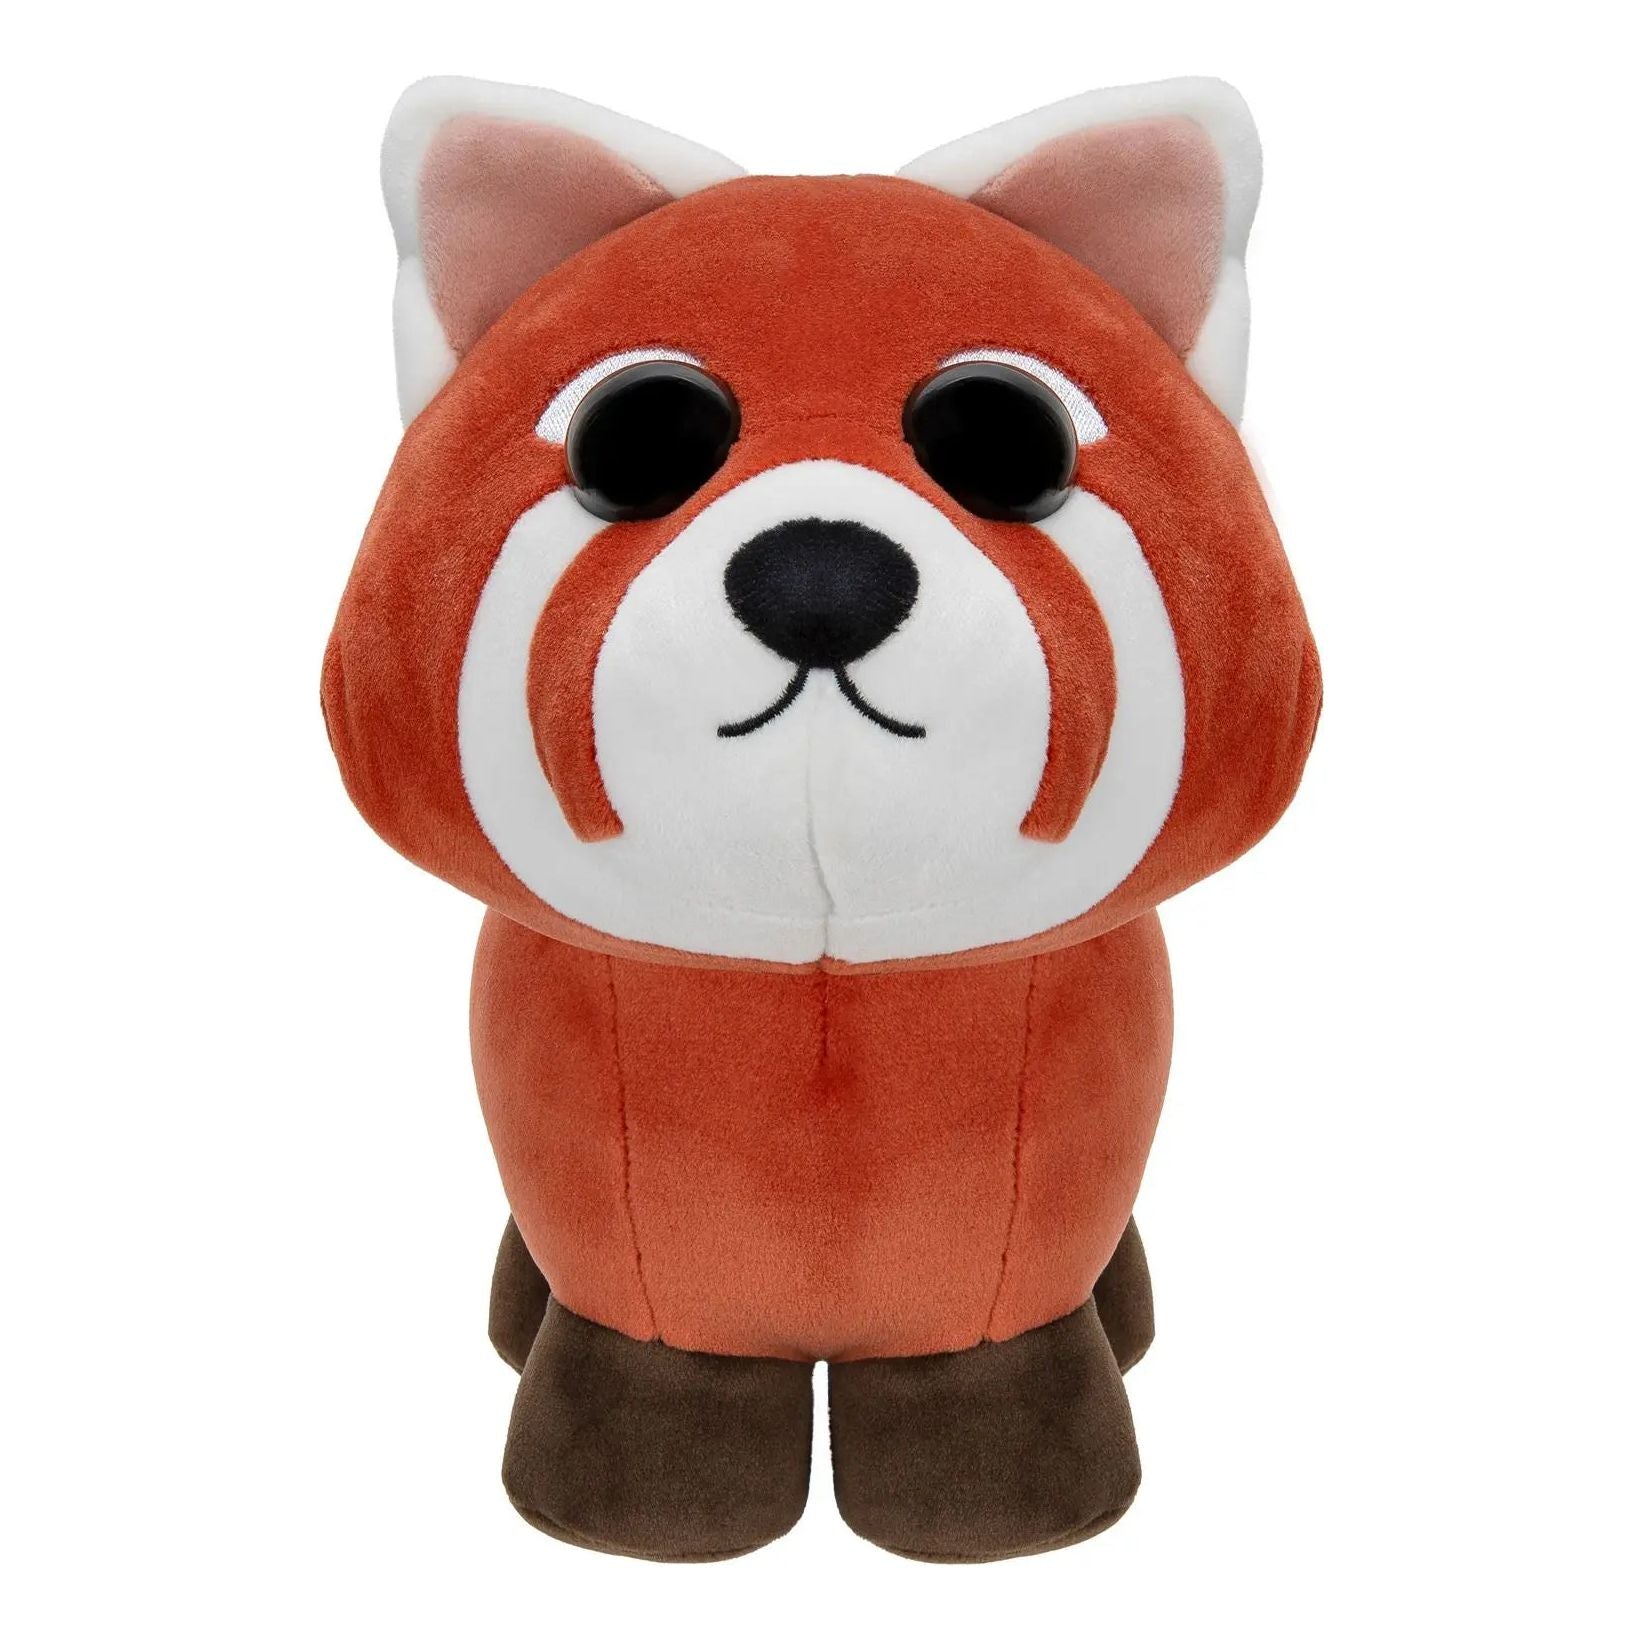 Adopt Me Collector Plush Red Panda Adopt Me